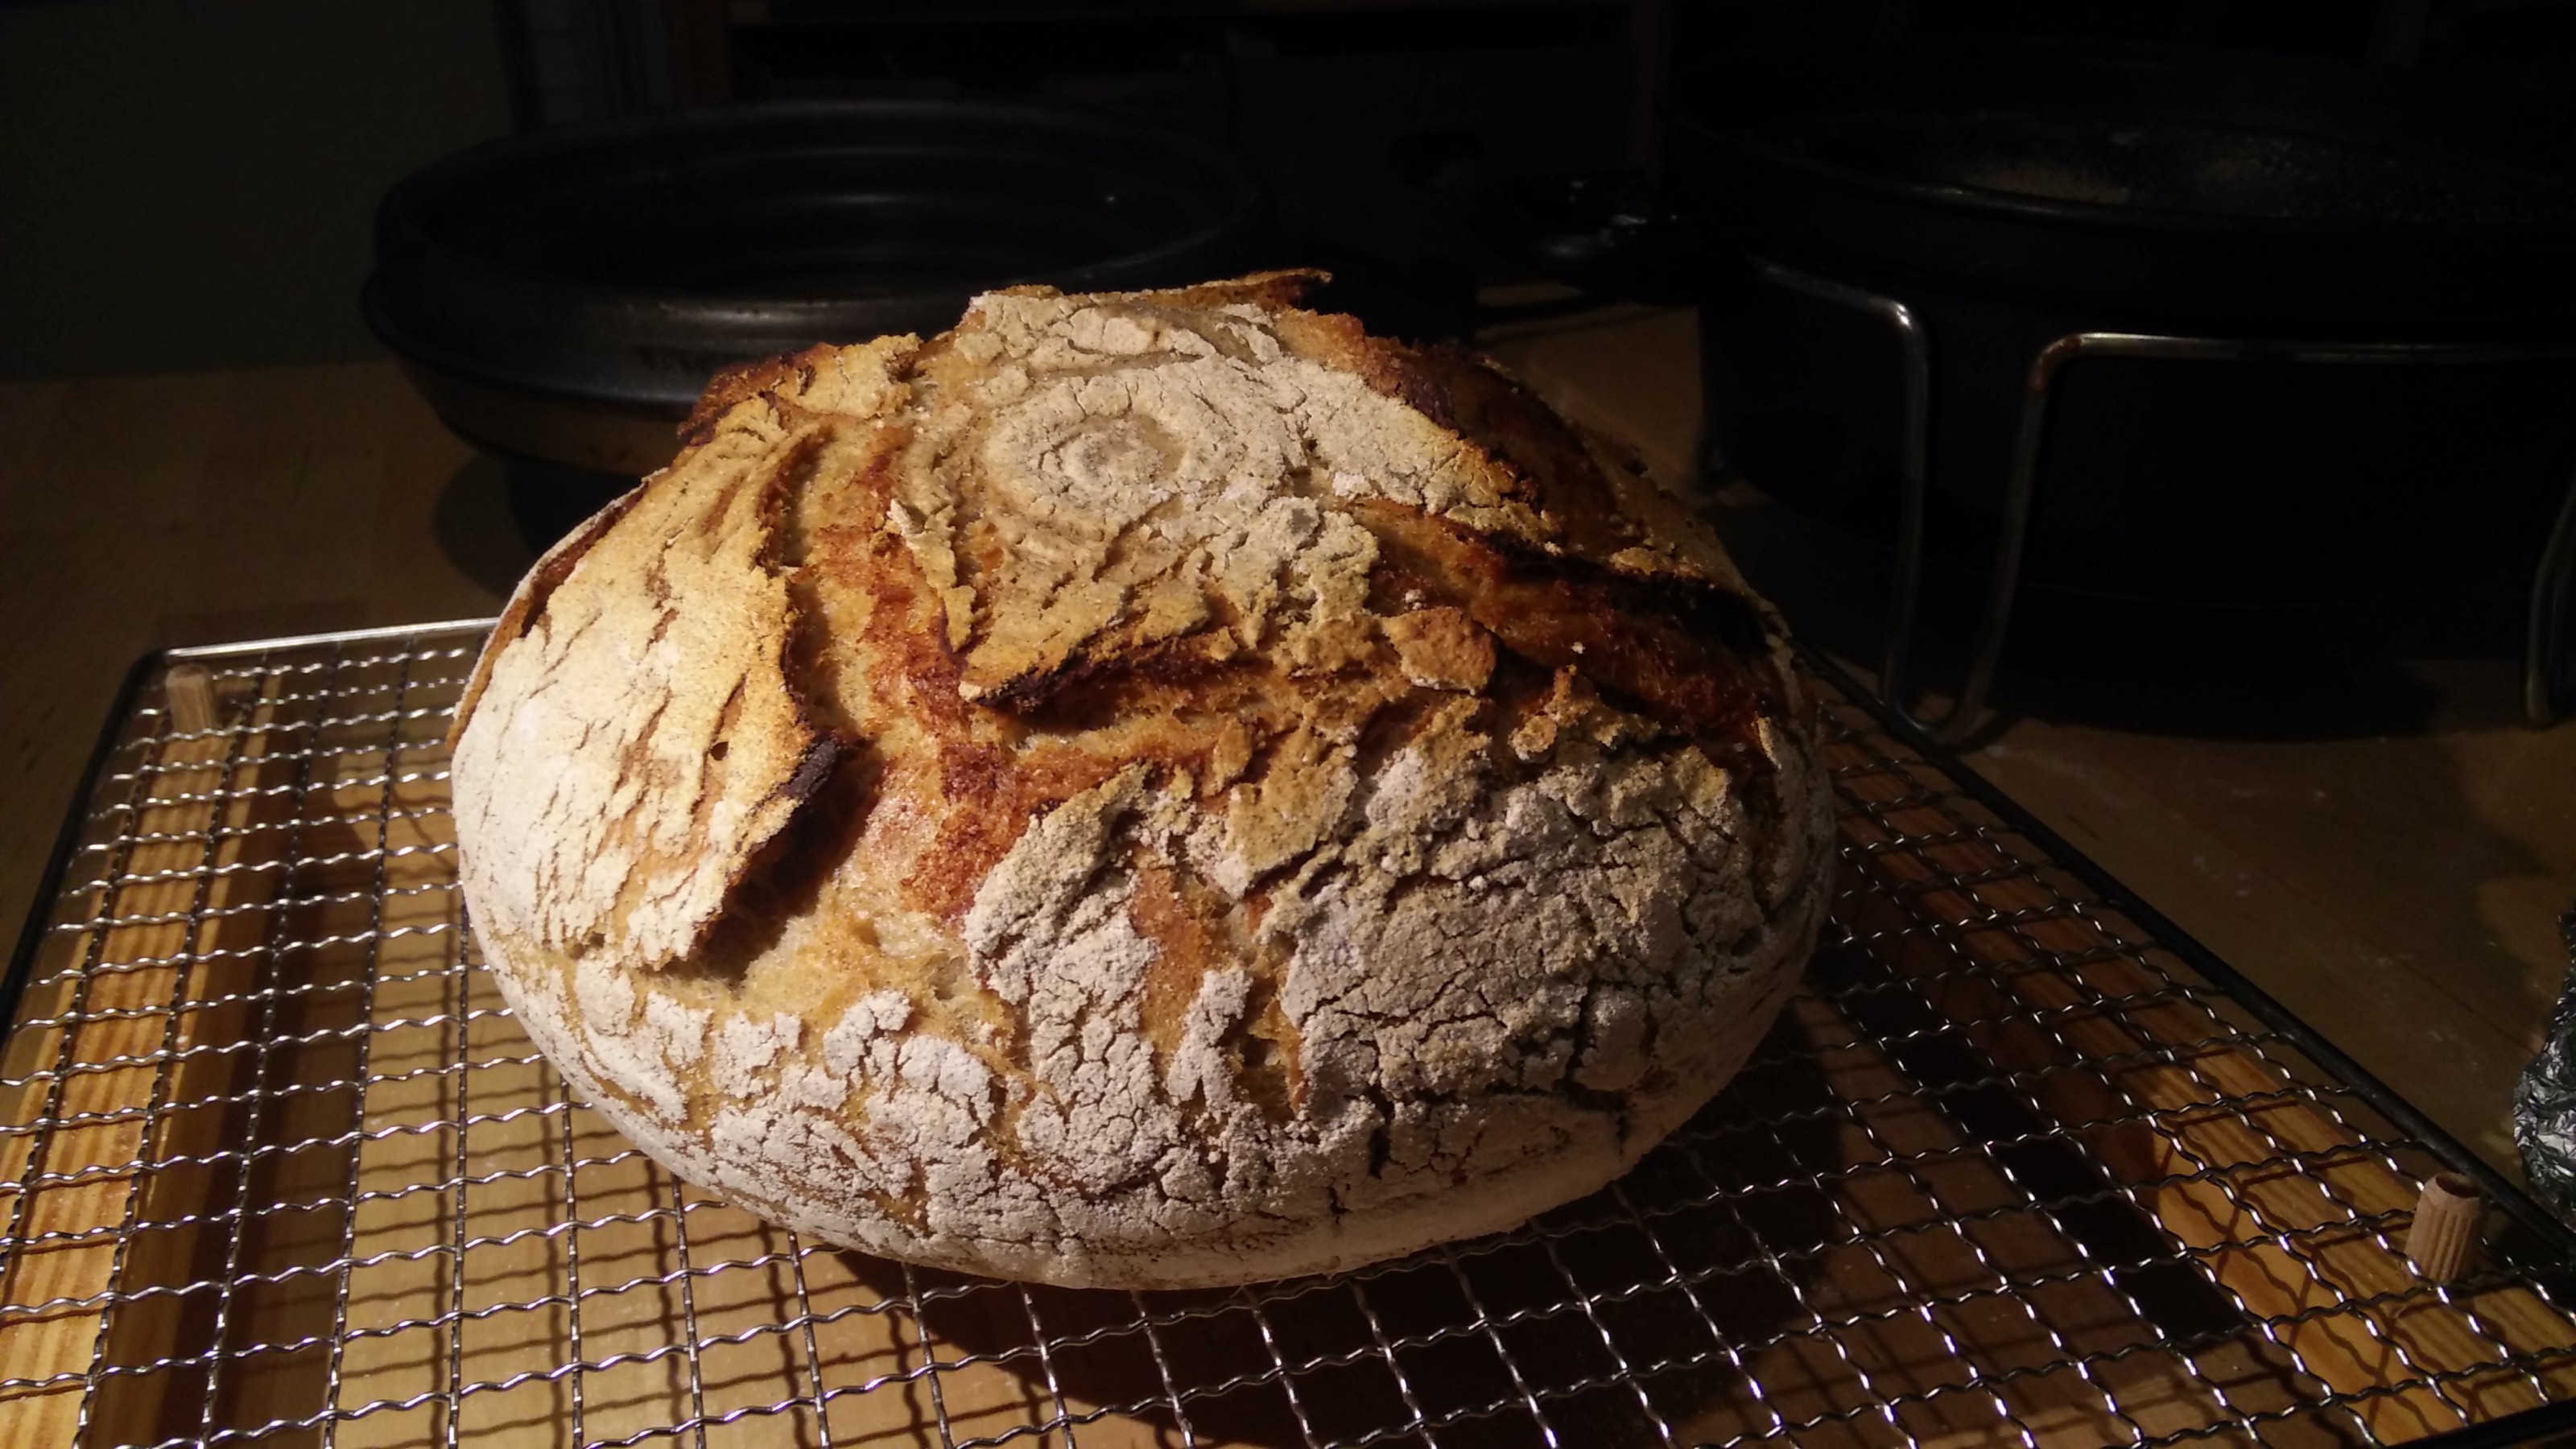 Bread photo data/2020-02-16/2020-02-16%2018.43.27.jpg